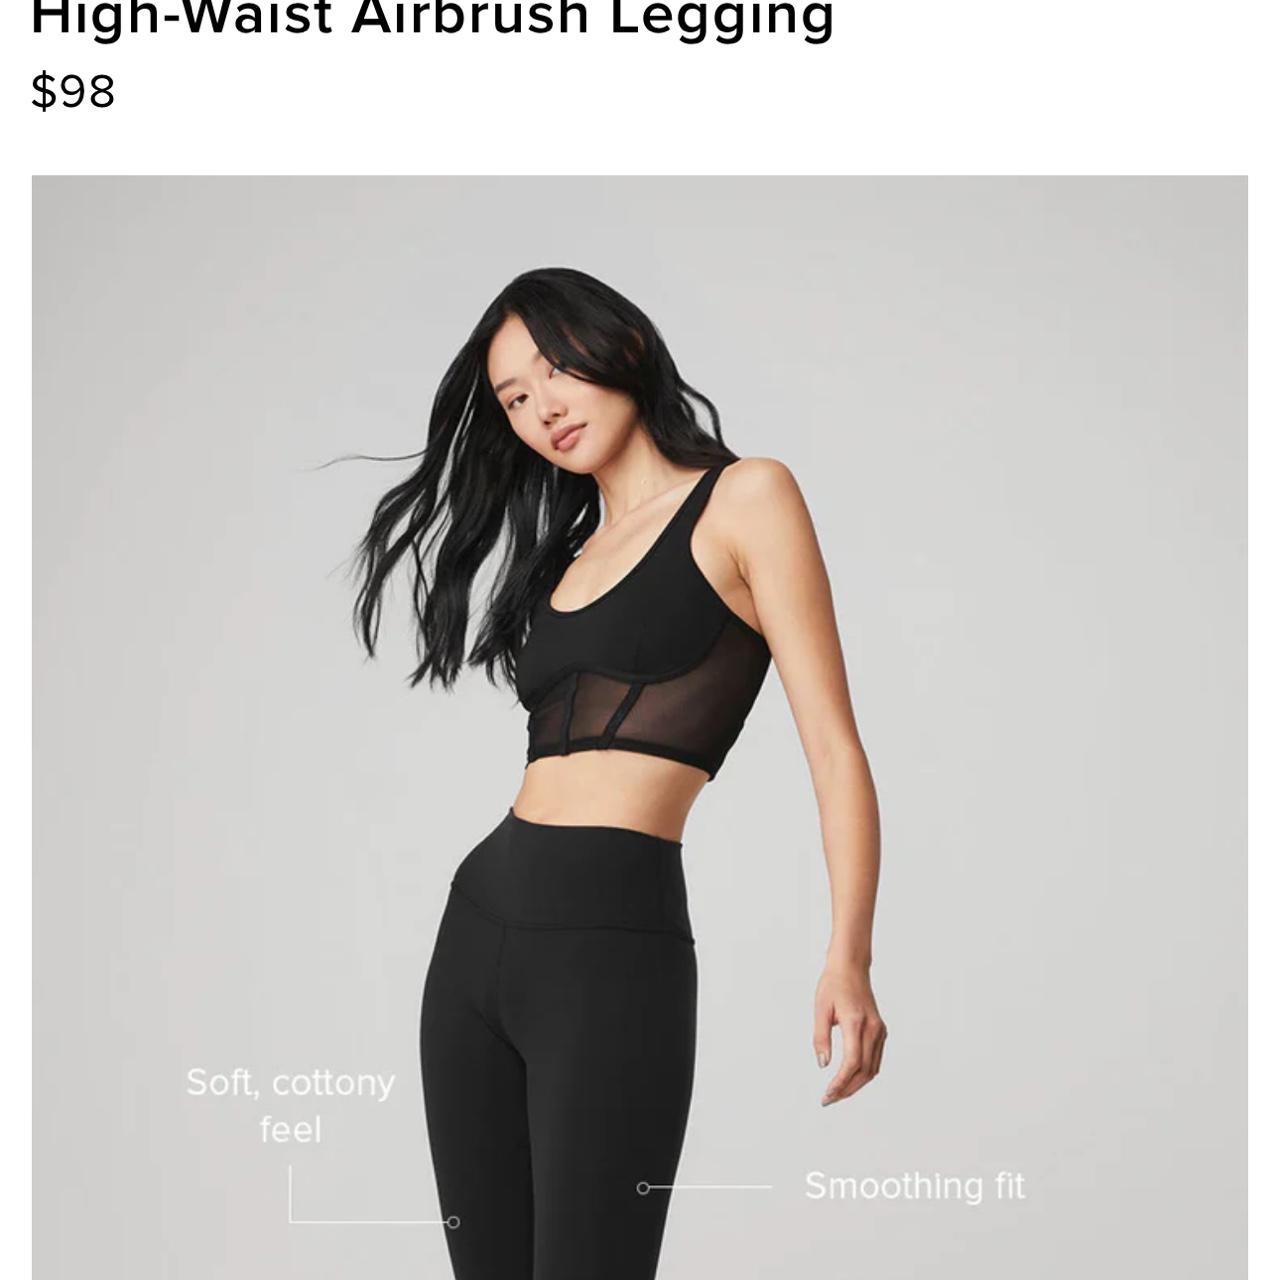 alo 7/8 High Waist Airbrush Legging in Black